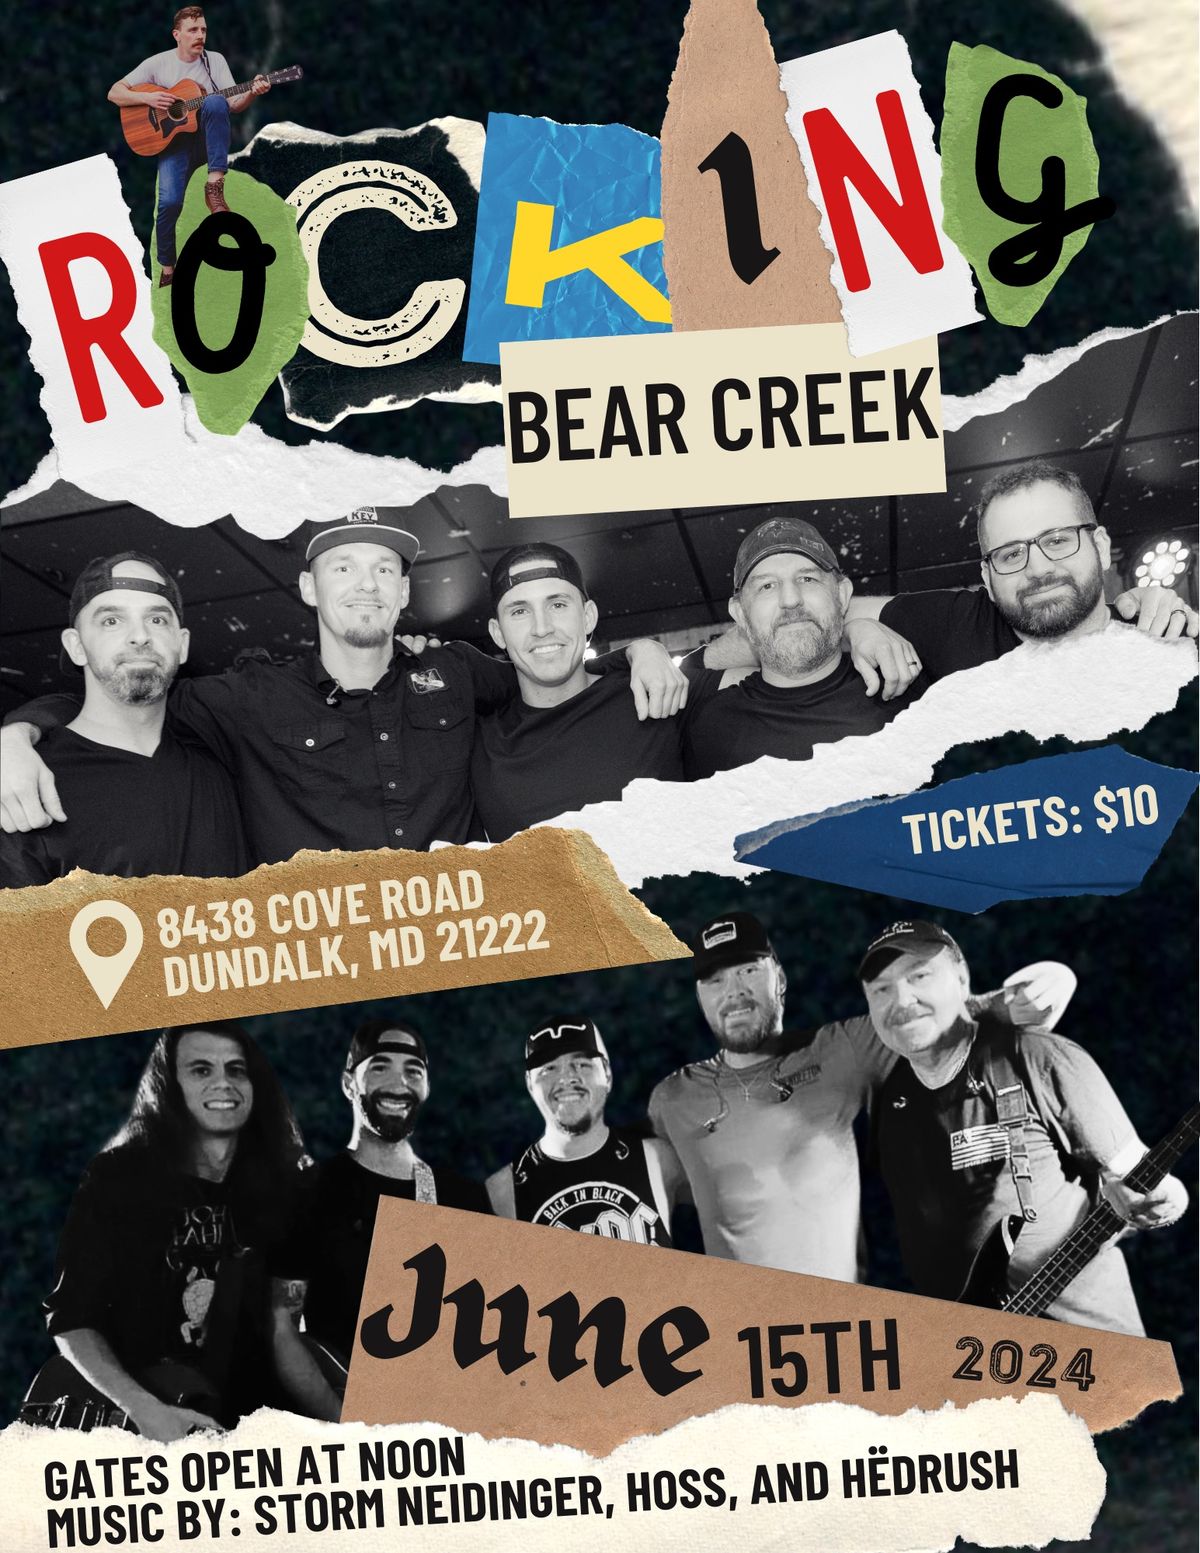 Rocking Bear Creek: H\u00cbDRUSH, HOSS, & Storm @ The Trial Club